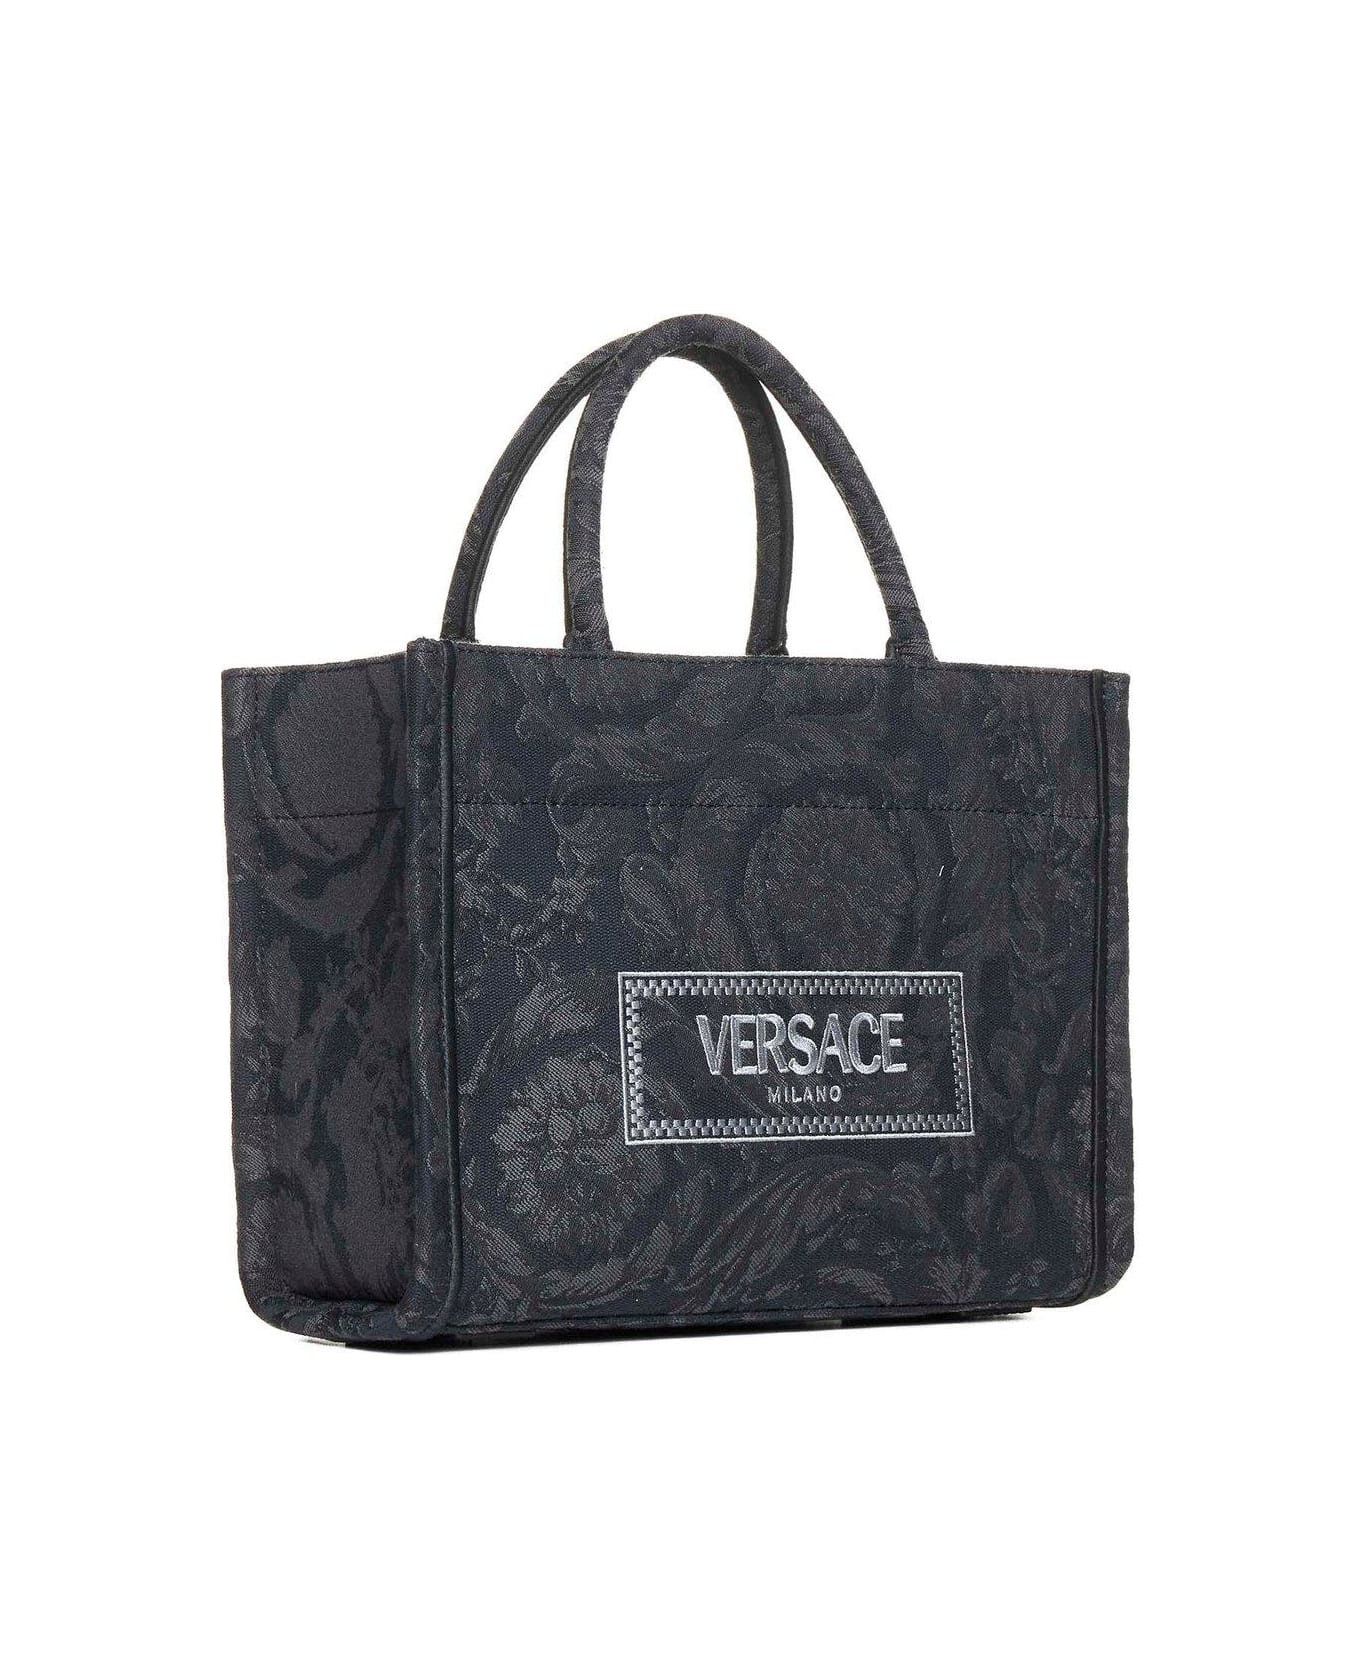 Versace All-over Floral Motif Top Handle Bag - Black+black-versace-gold